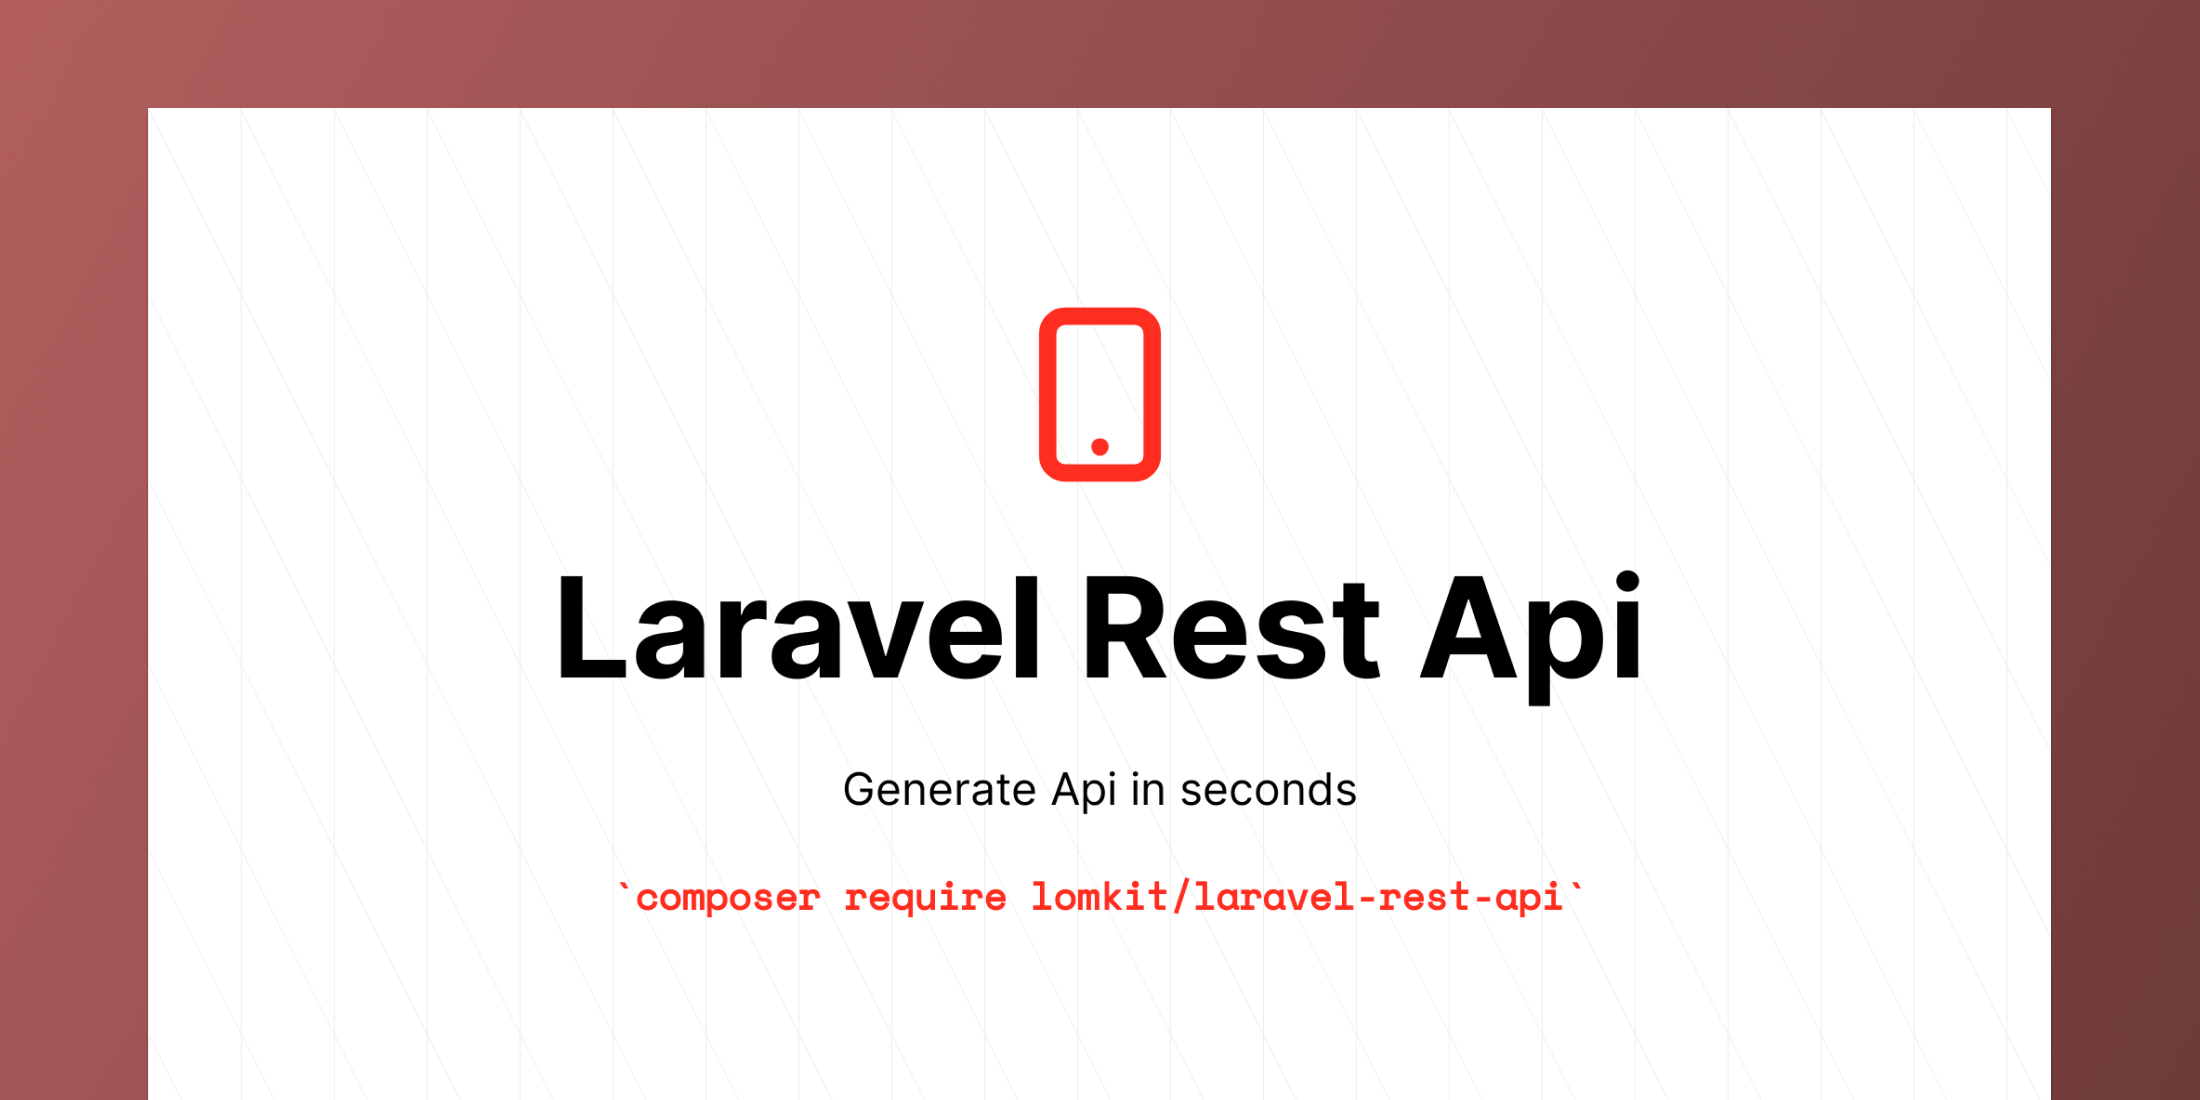 Laravel Rest Api now supports Laravel Scout